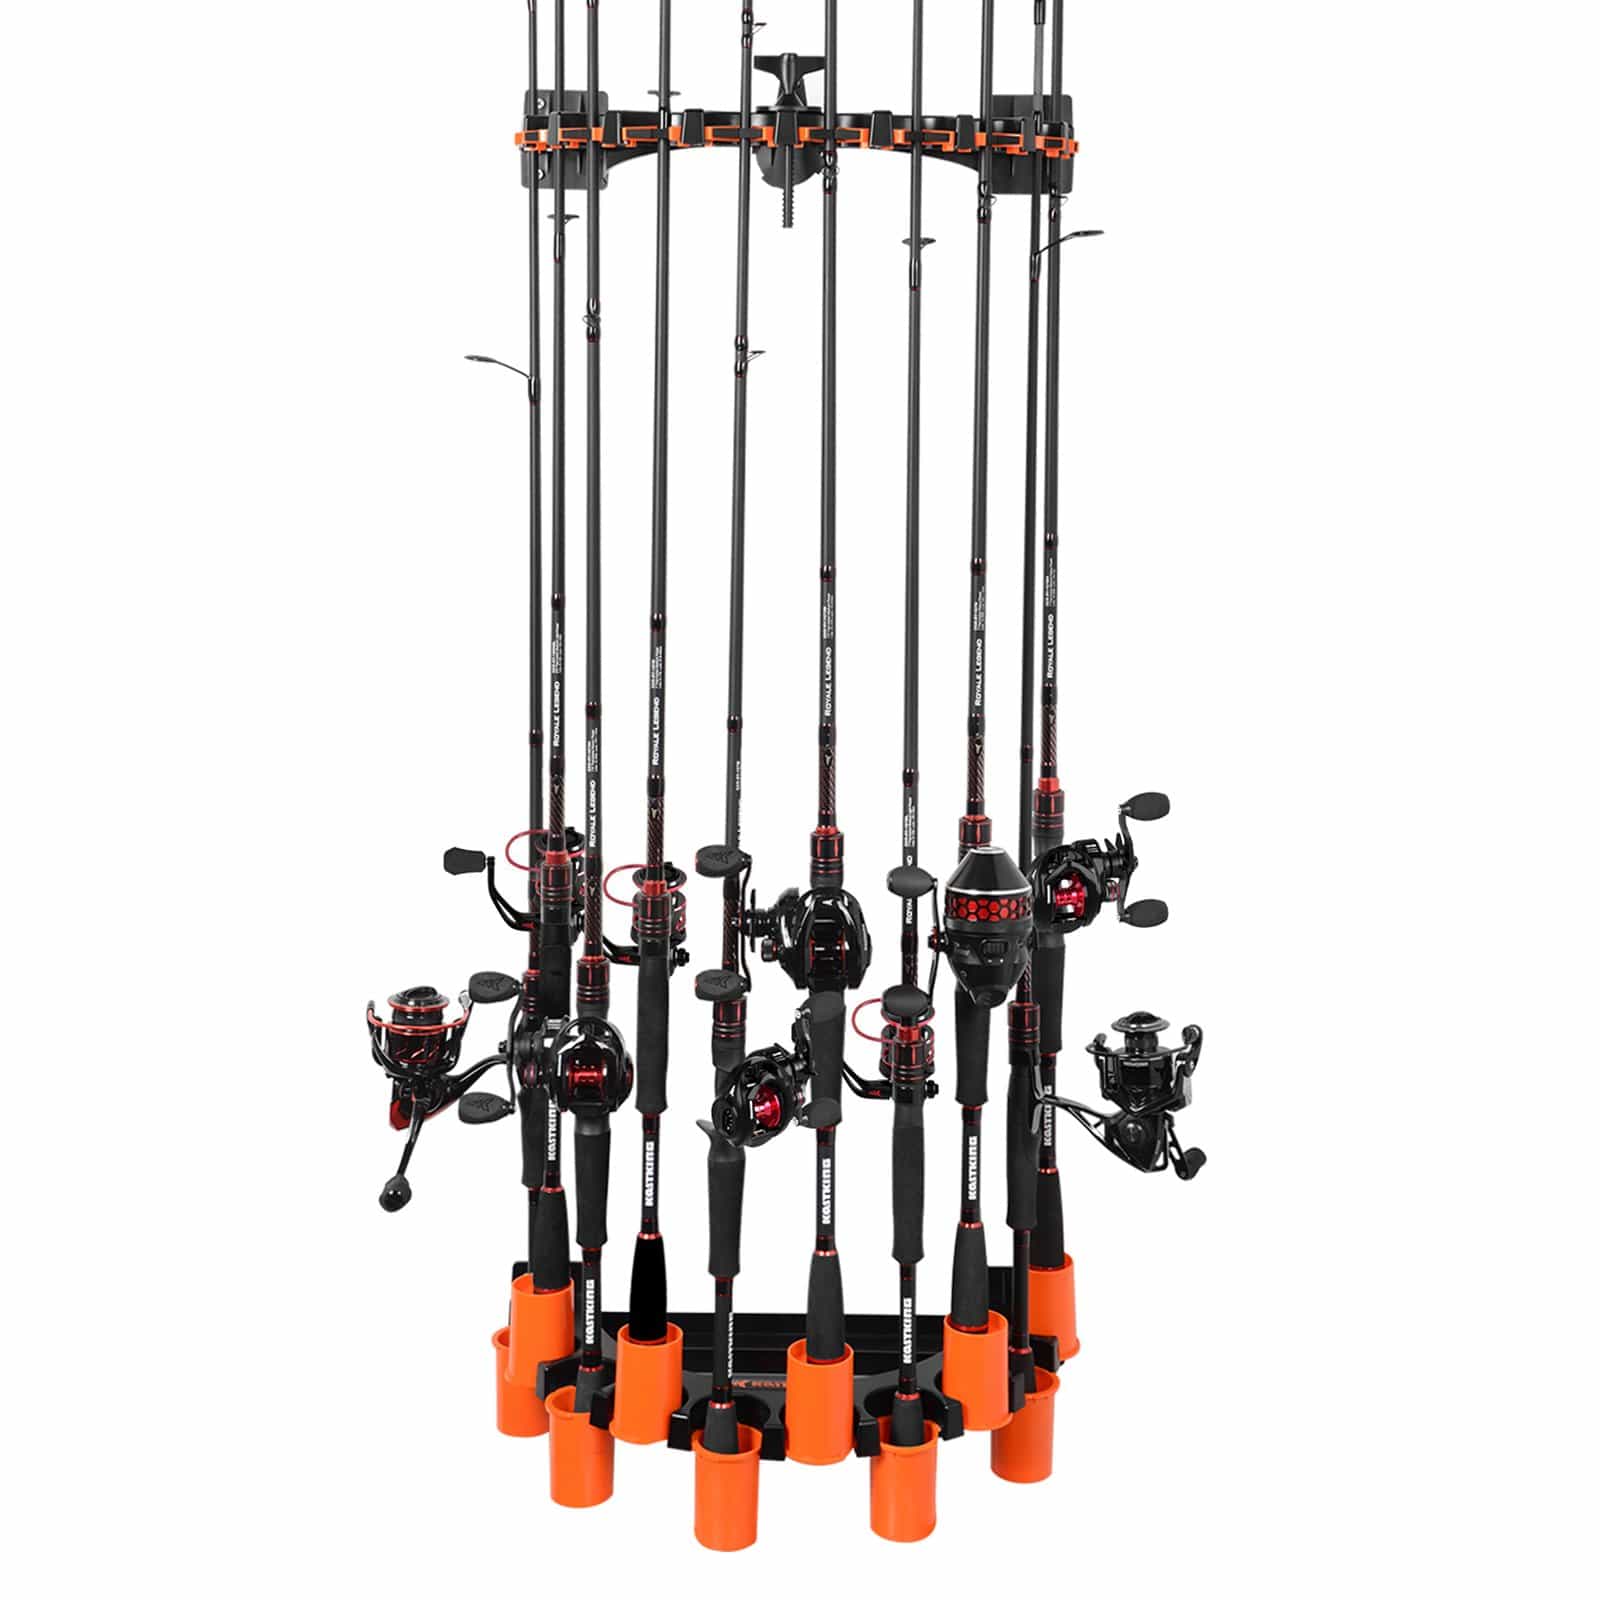 10 Holders Vertical Fishing Rod Holder wall mounted Rod Racks